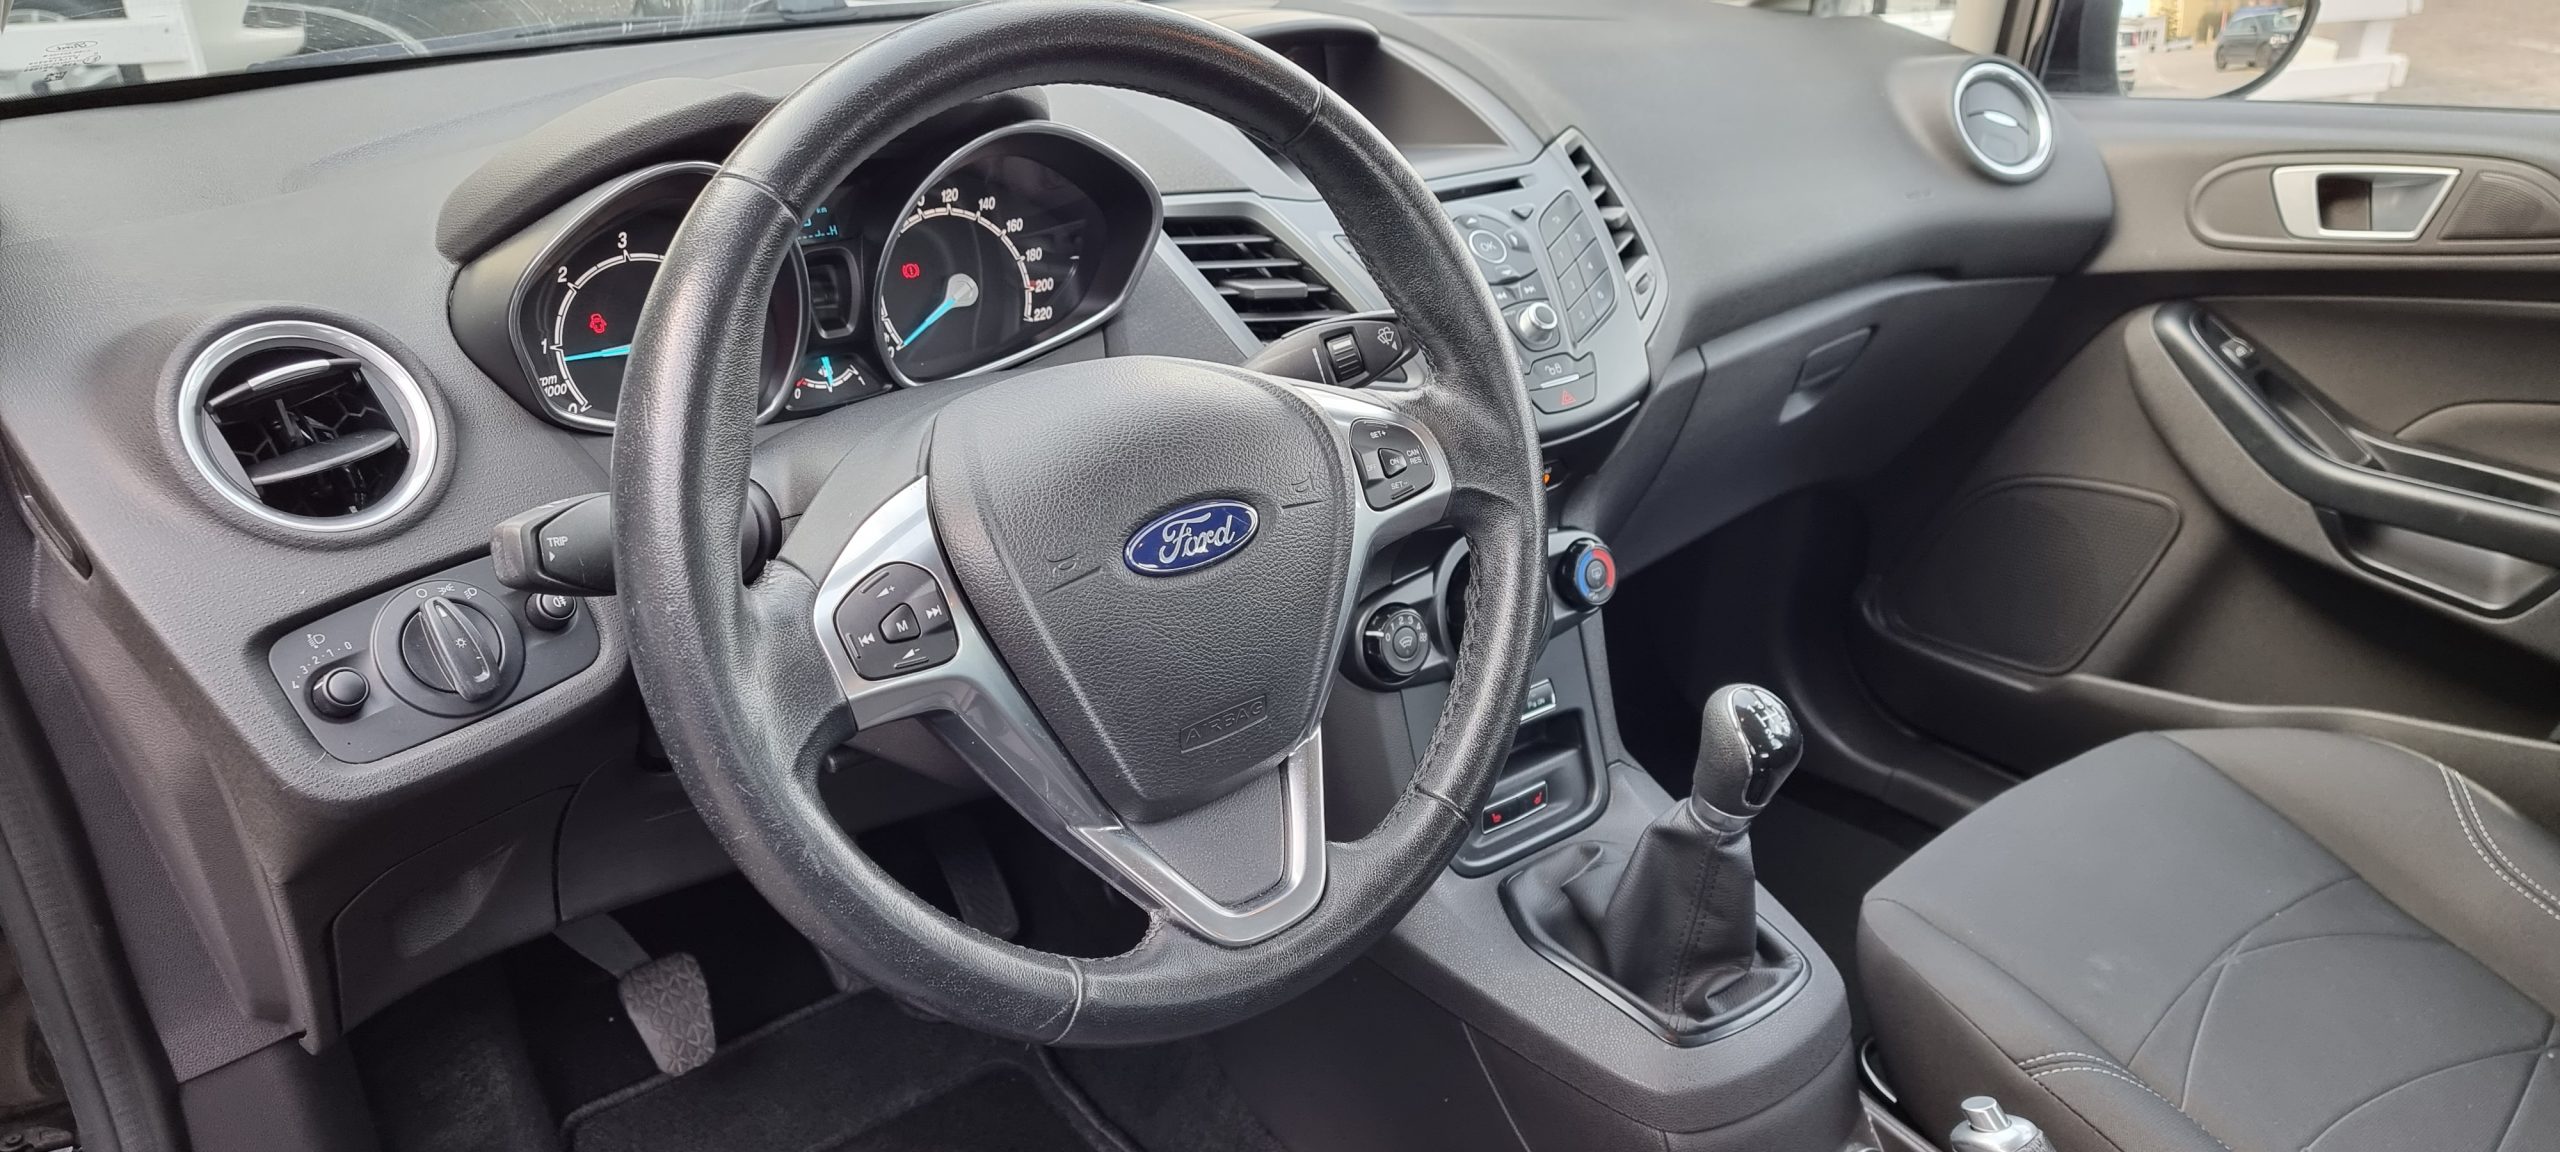 Ford Fiesta 1.5 TDCI